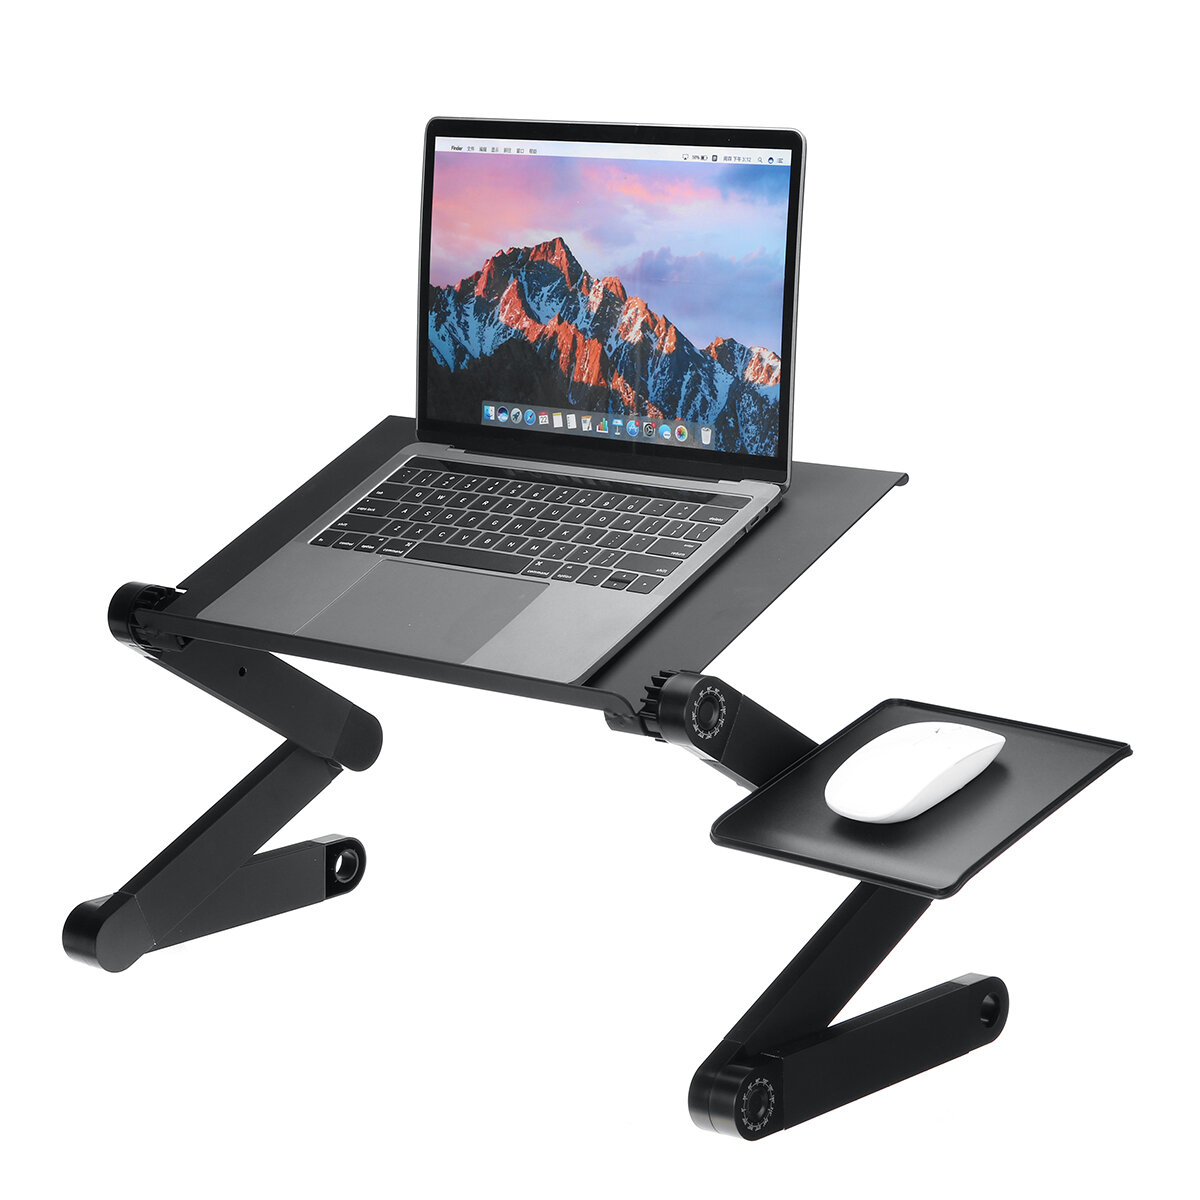 360? Adjustable Laptop Desk Foldable Portable Laptop Stand Color Black